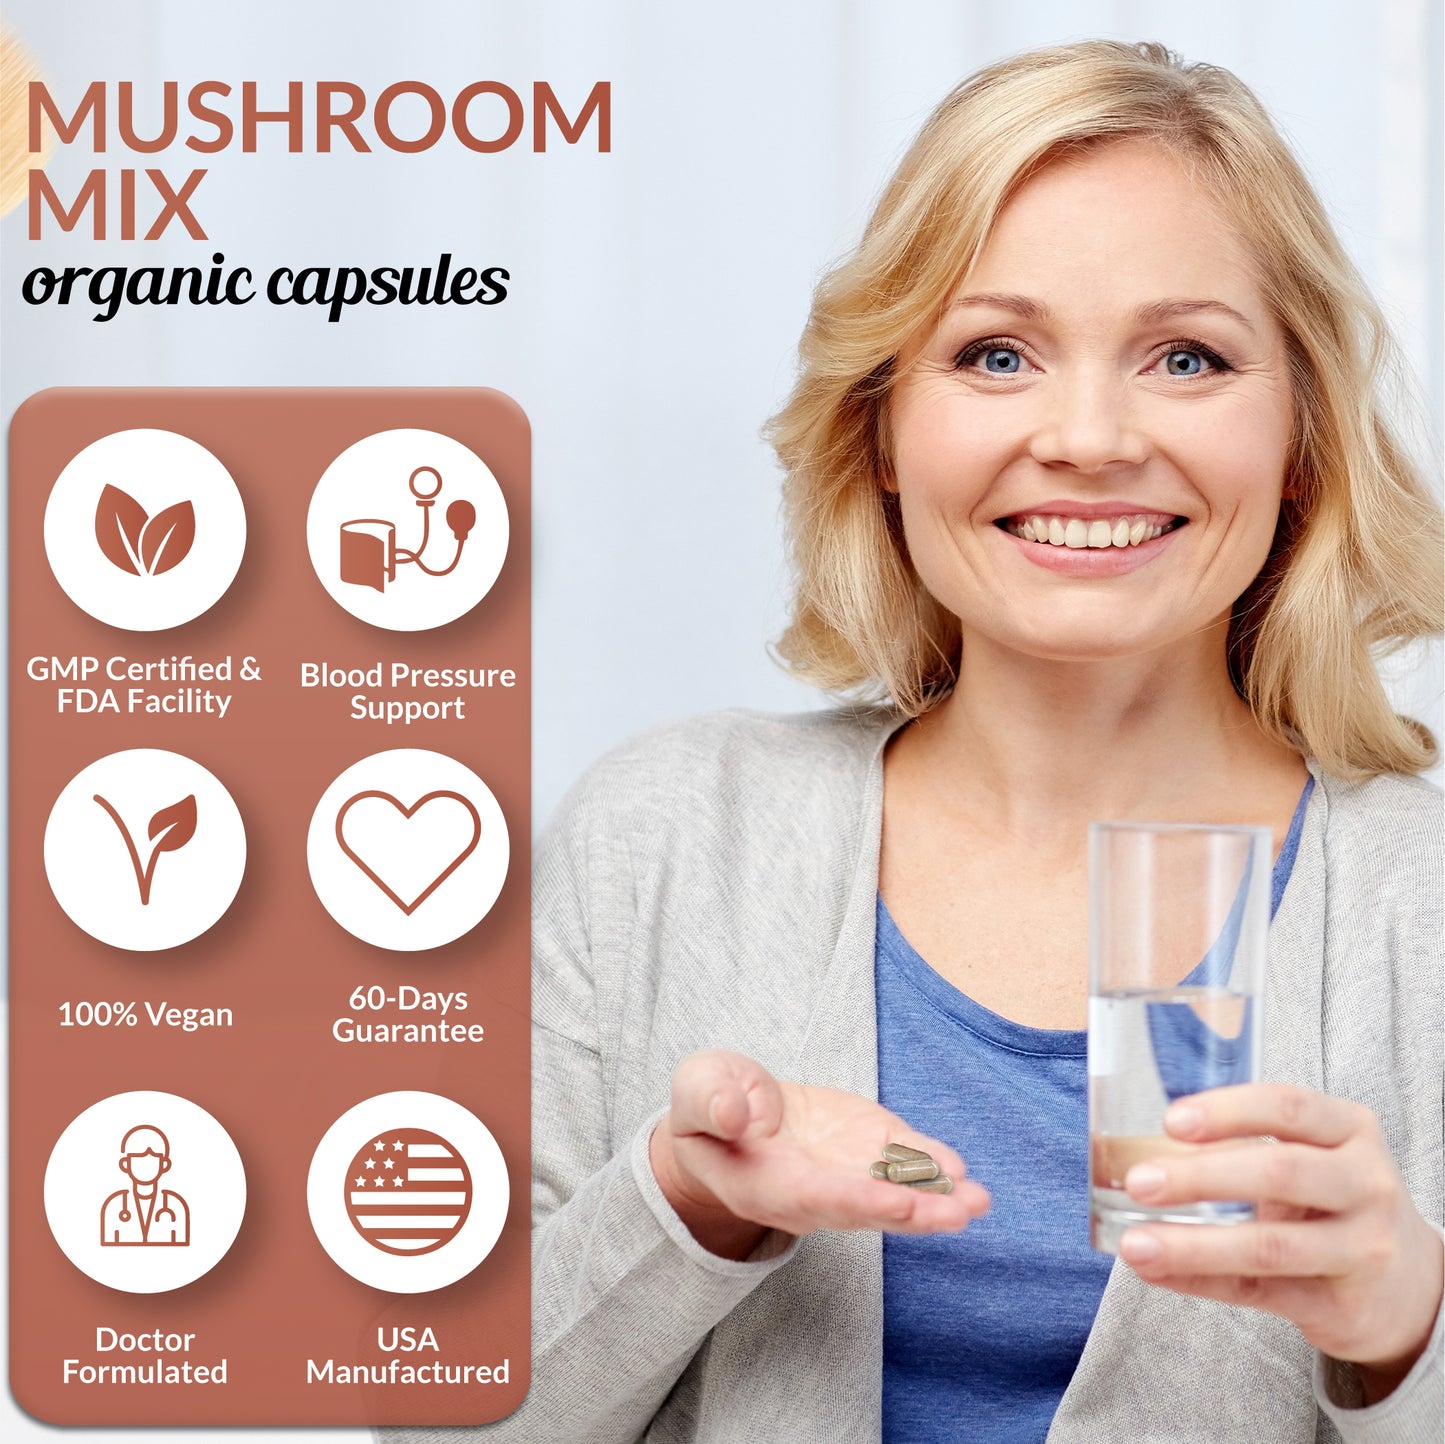 Organic Mushroom Mix Immune System Support (Reishi, Cordyceps, Lione Mane, Turkey Tail)